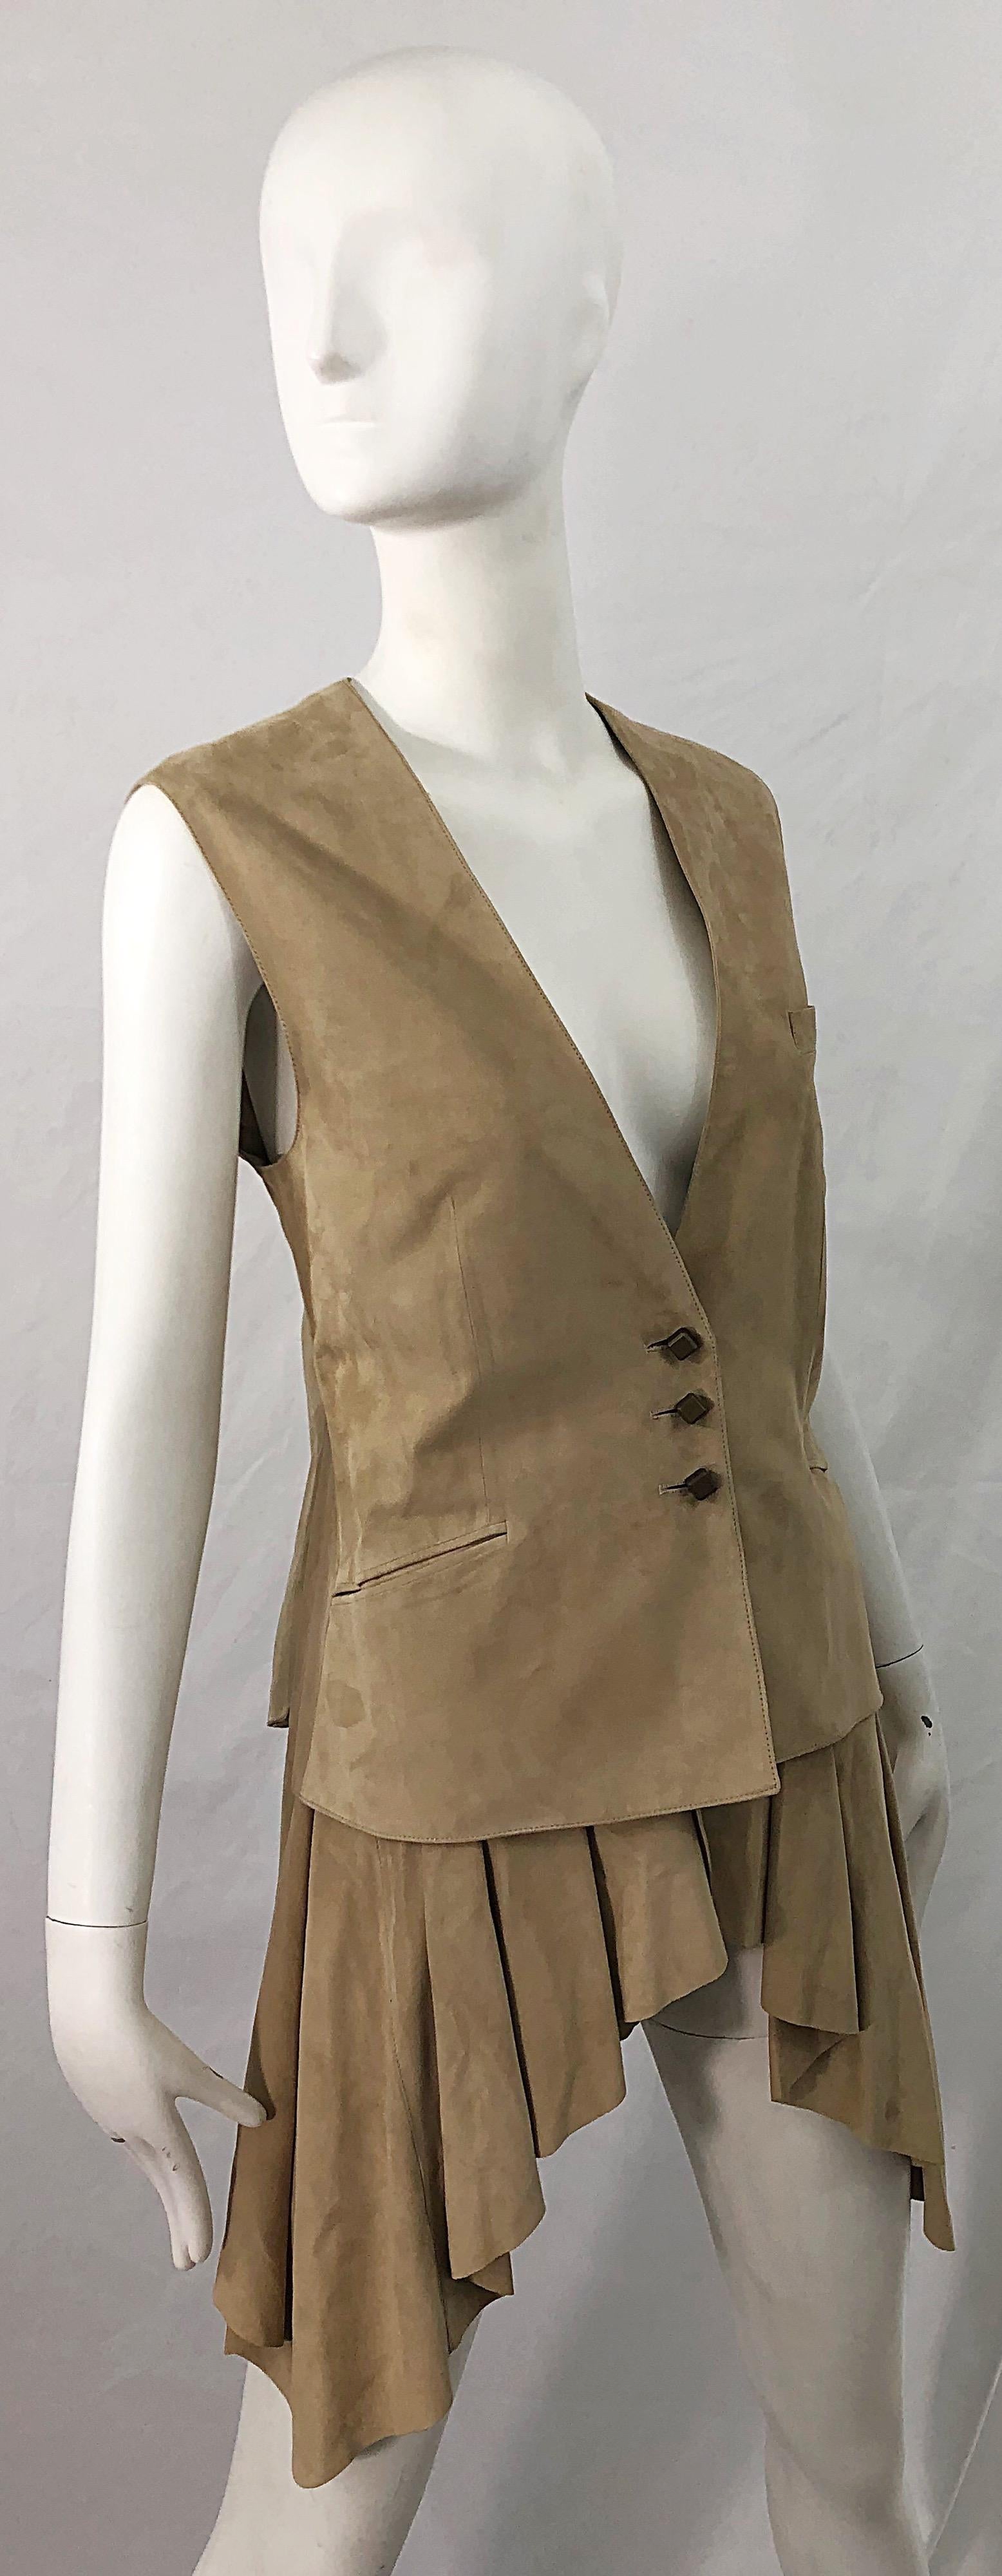 Emanuel Ungaro 1990s Tan Suede Leather Size 42 / 8 Dip Hem Vintage 90s Vest Top For Sale 4